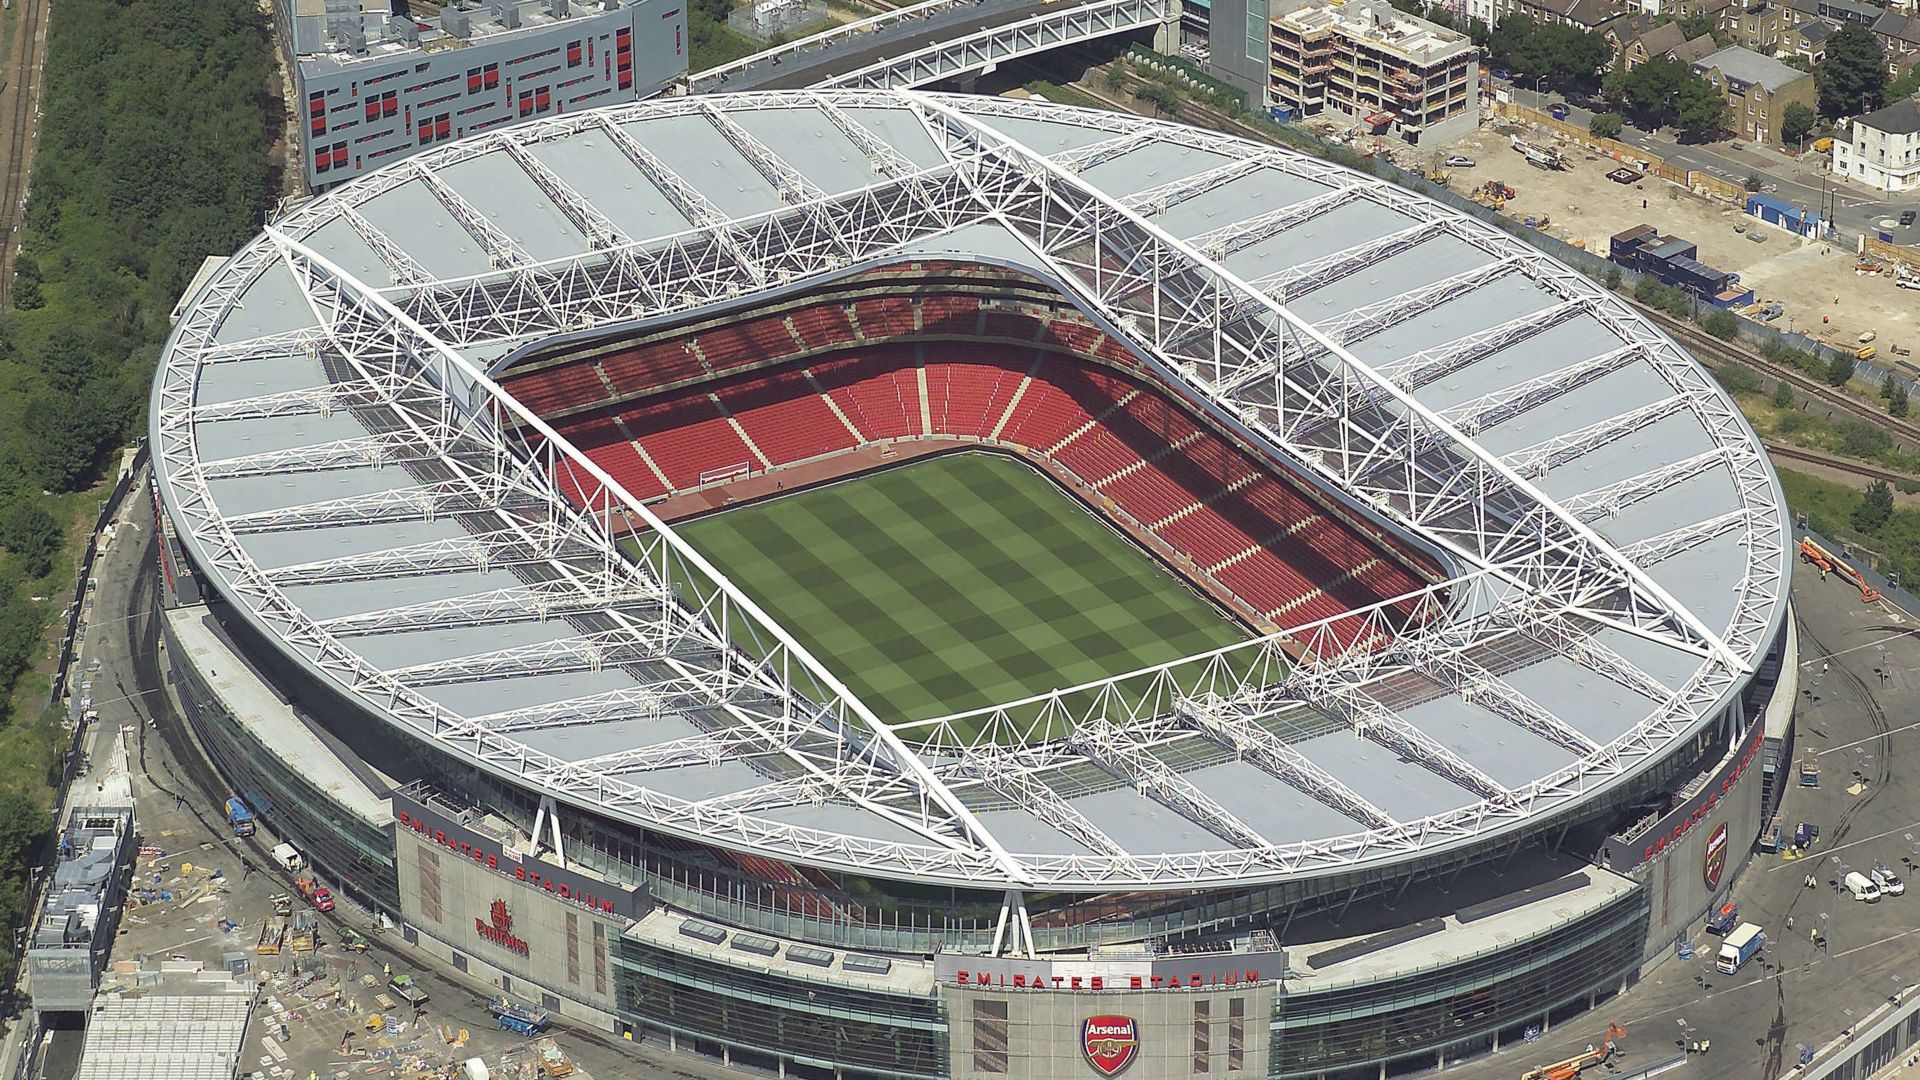 Emirates Stadium Arsenal in London, UK